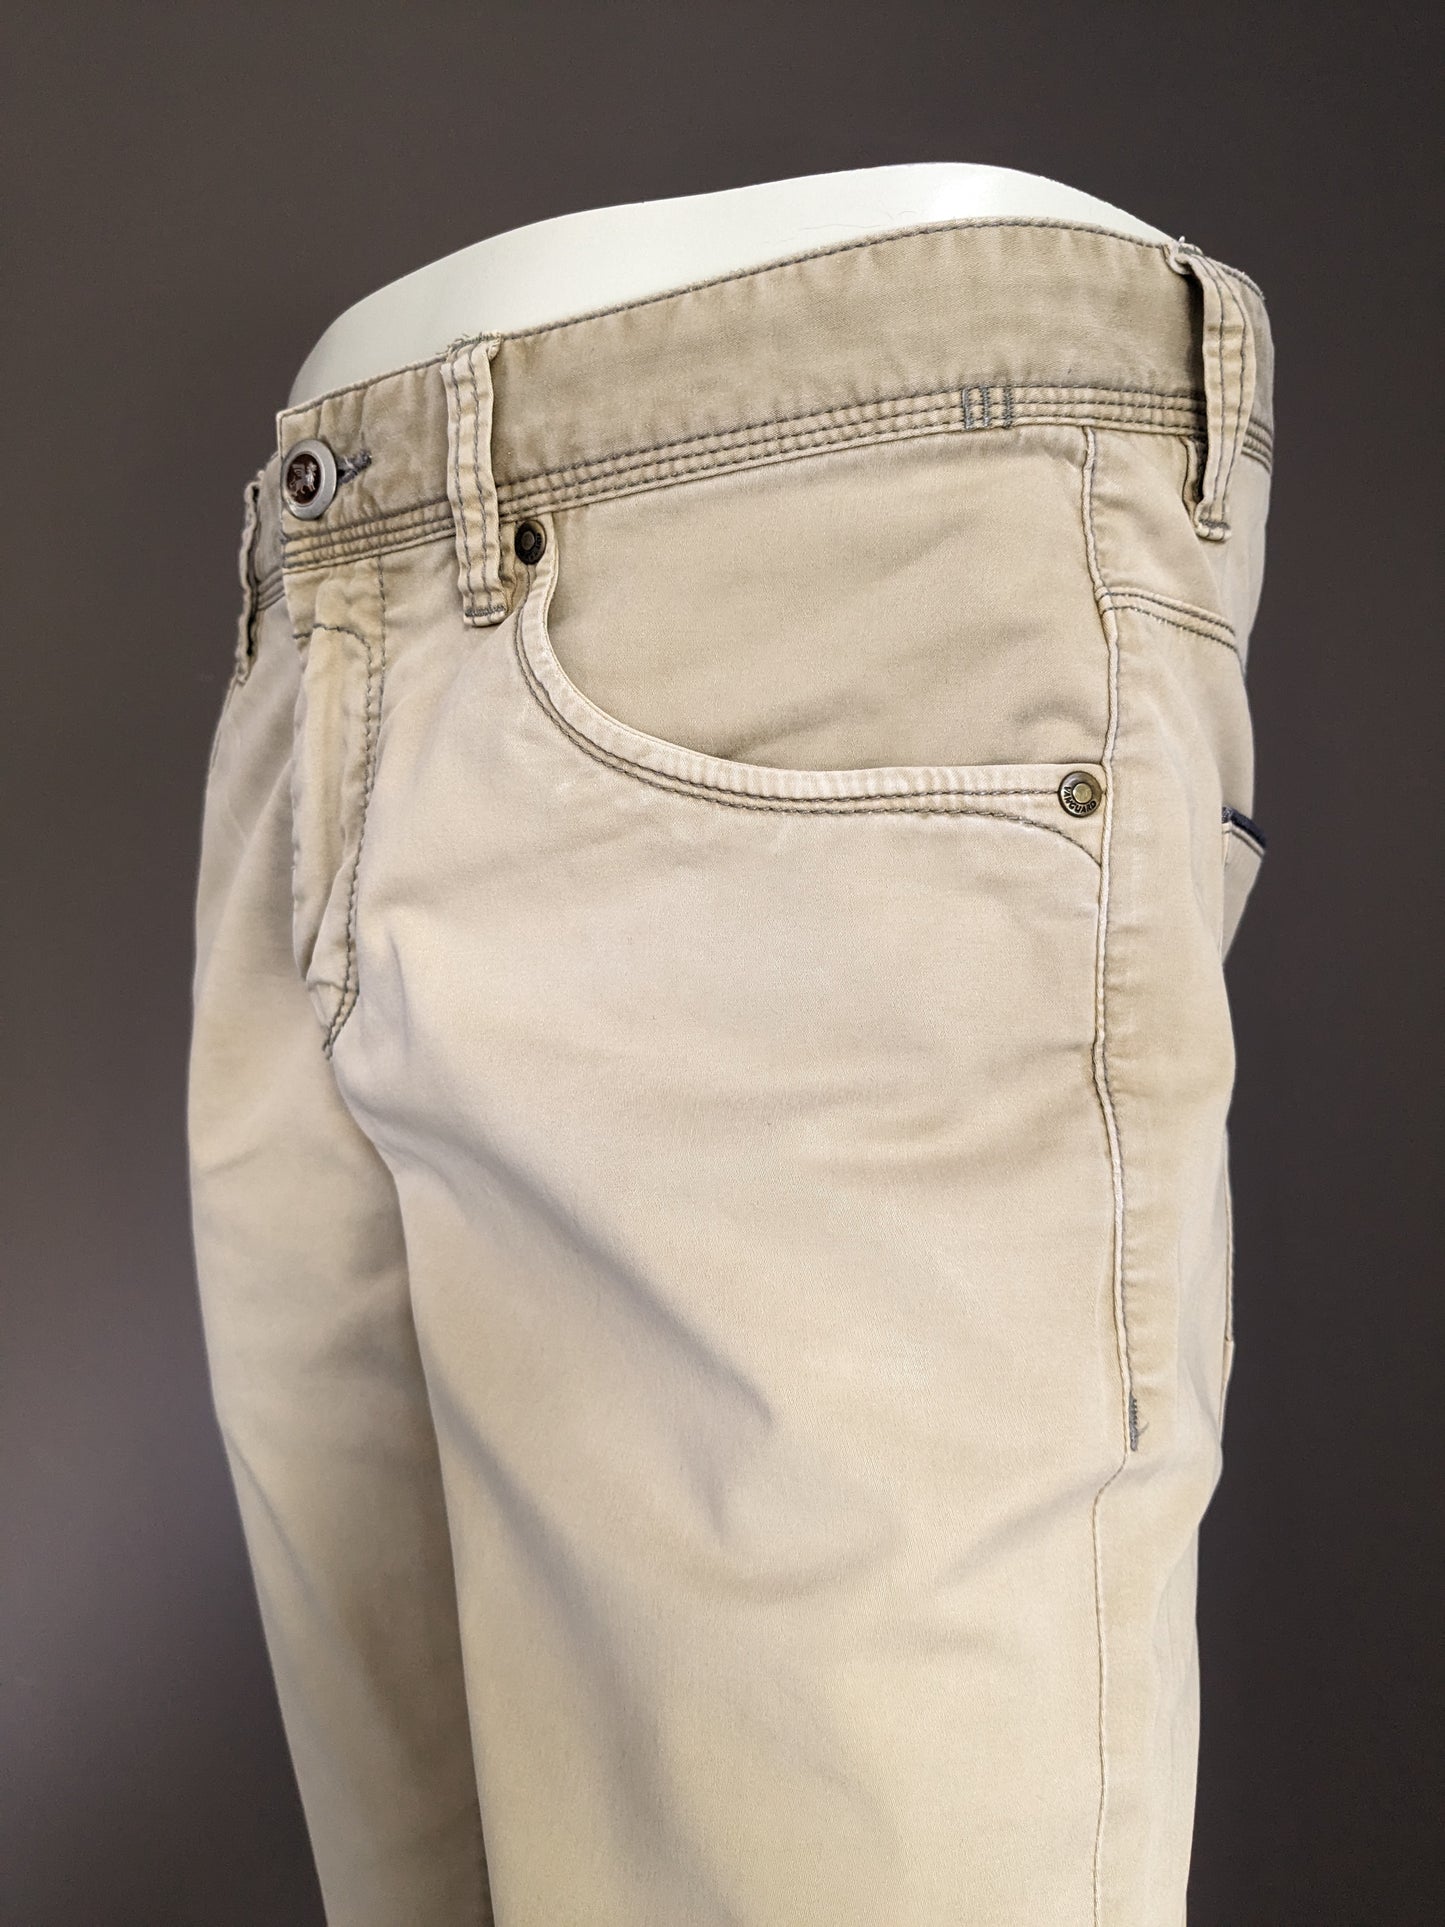 Pantaloni d'avanguardia. Beige colorato. Taglia W31 - L32.